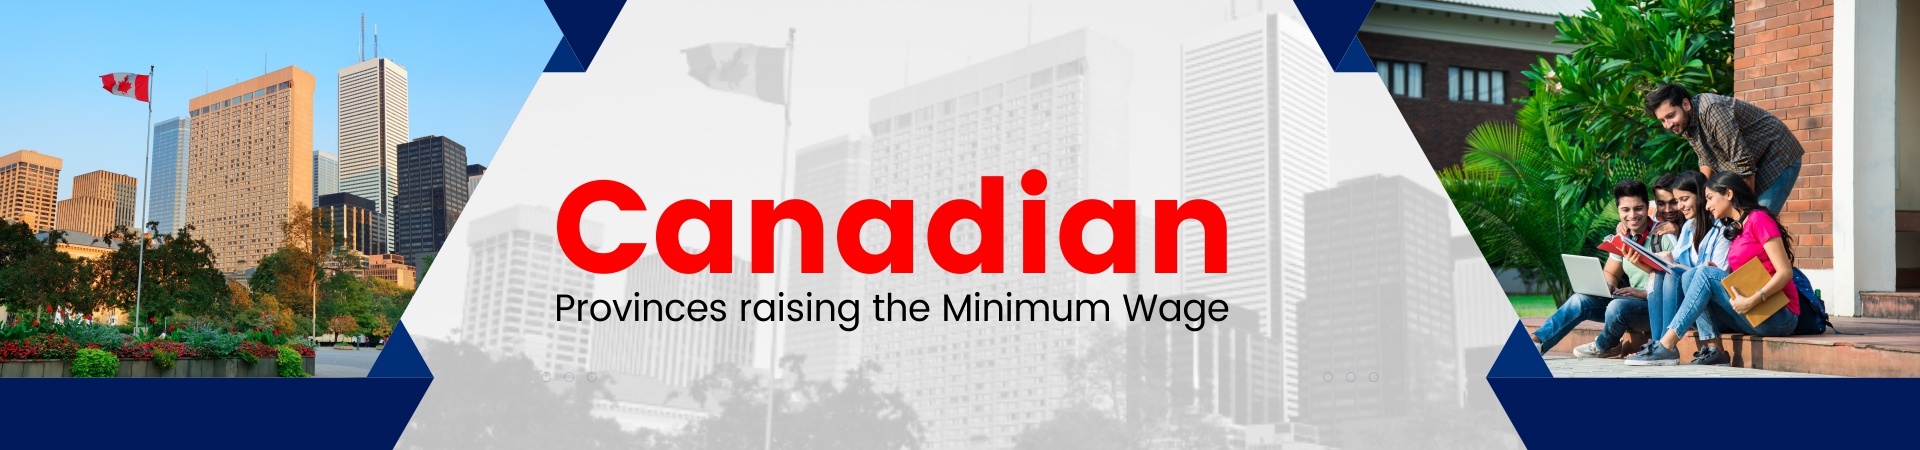 Canadian Provinces raising the Minimum Wage